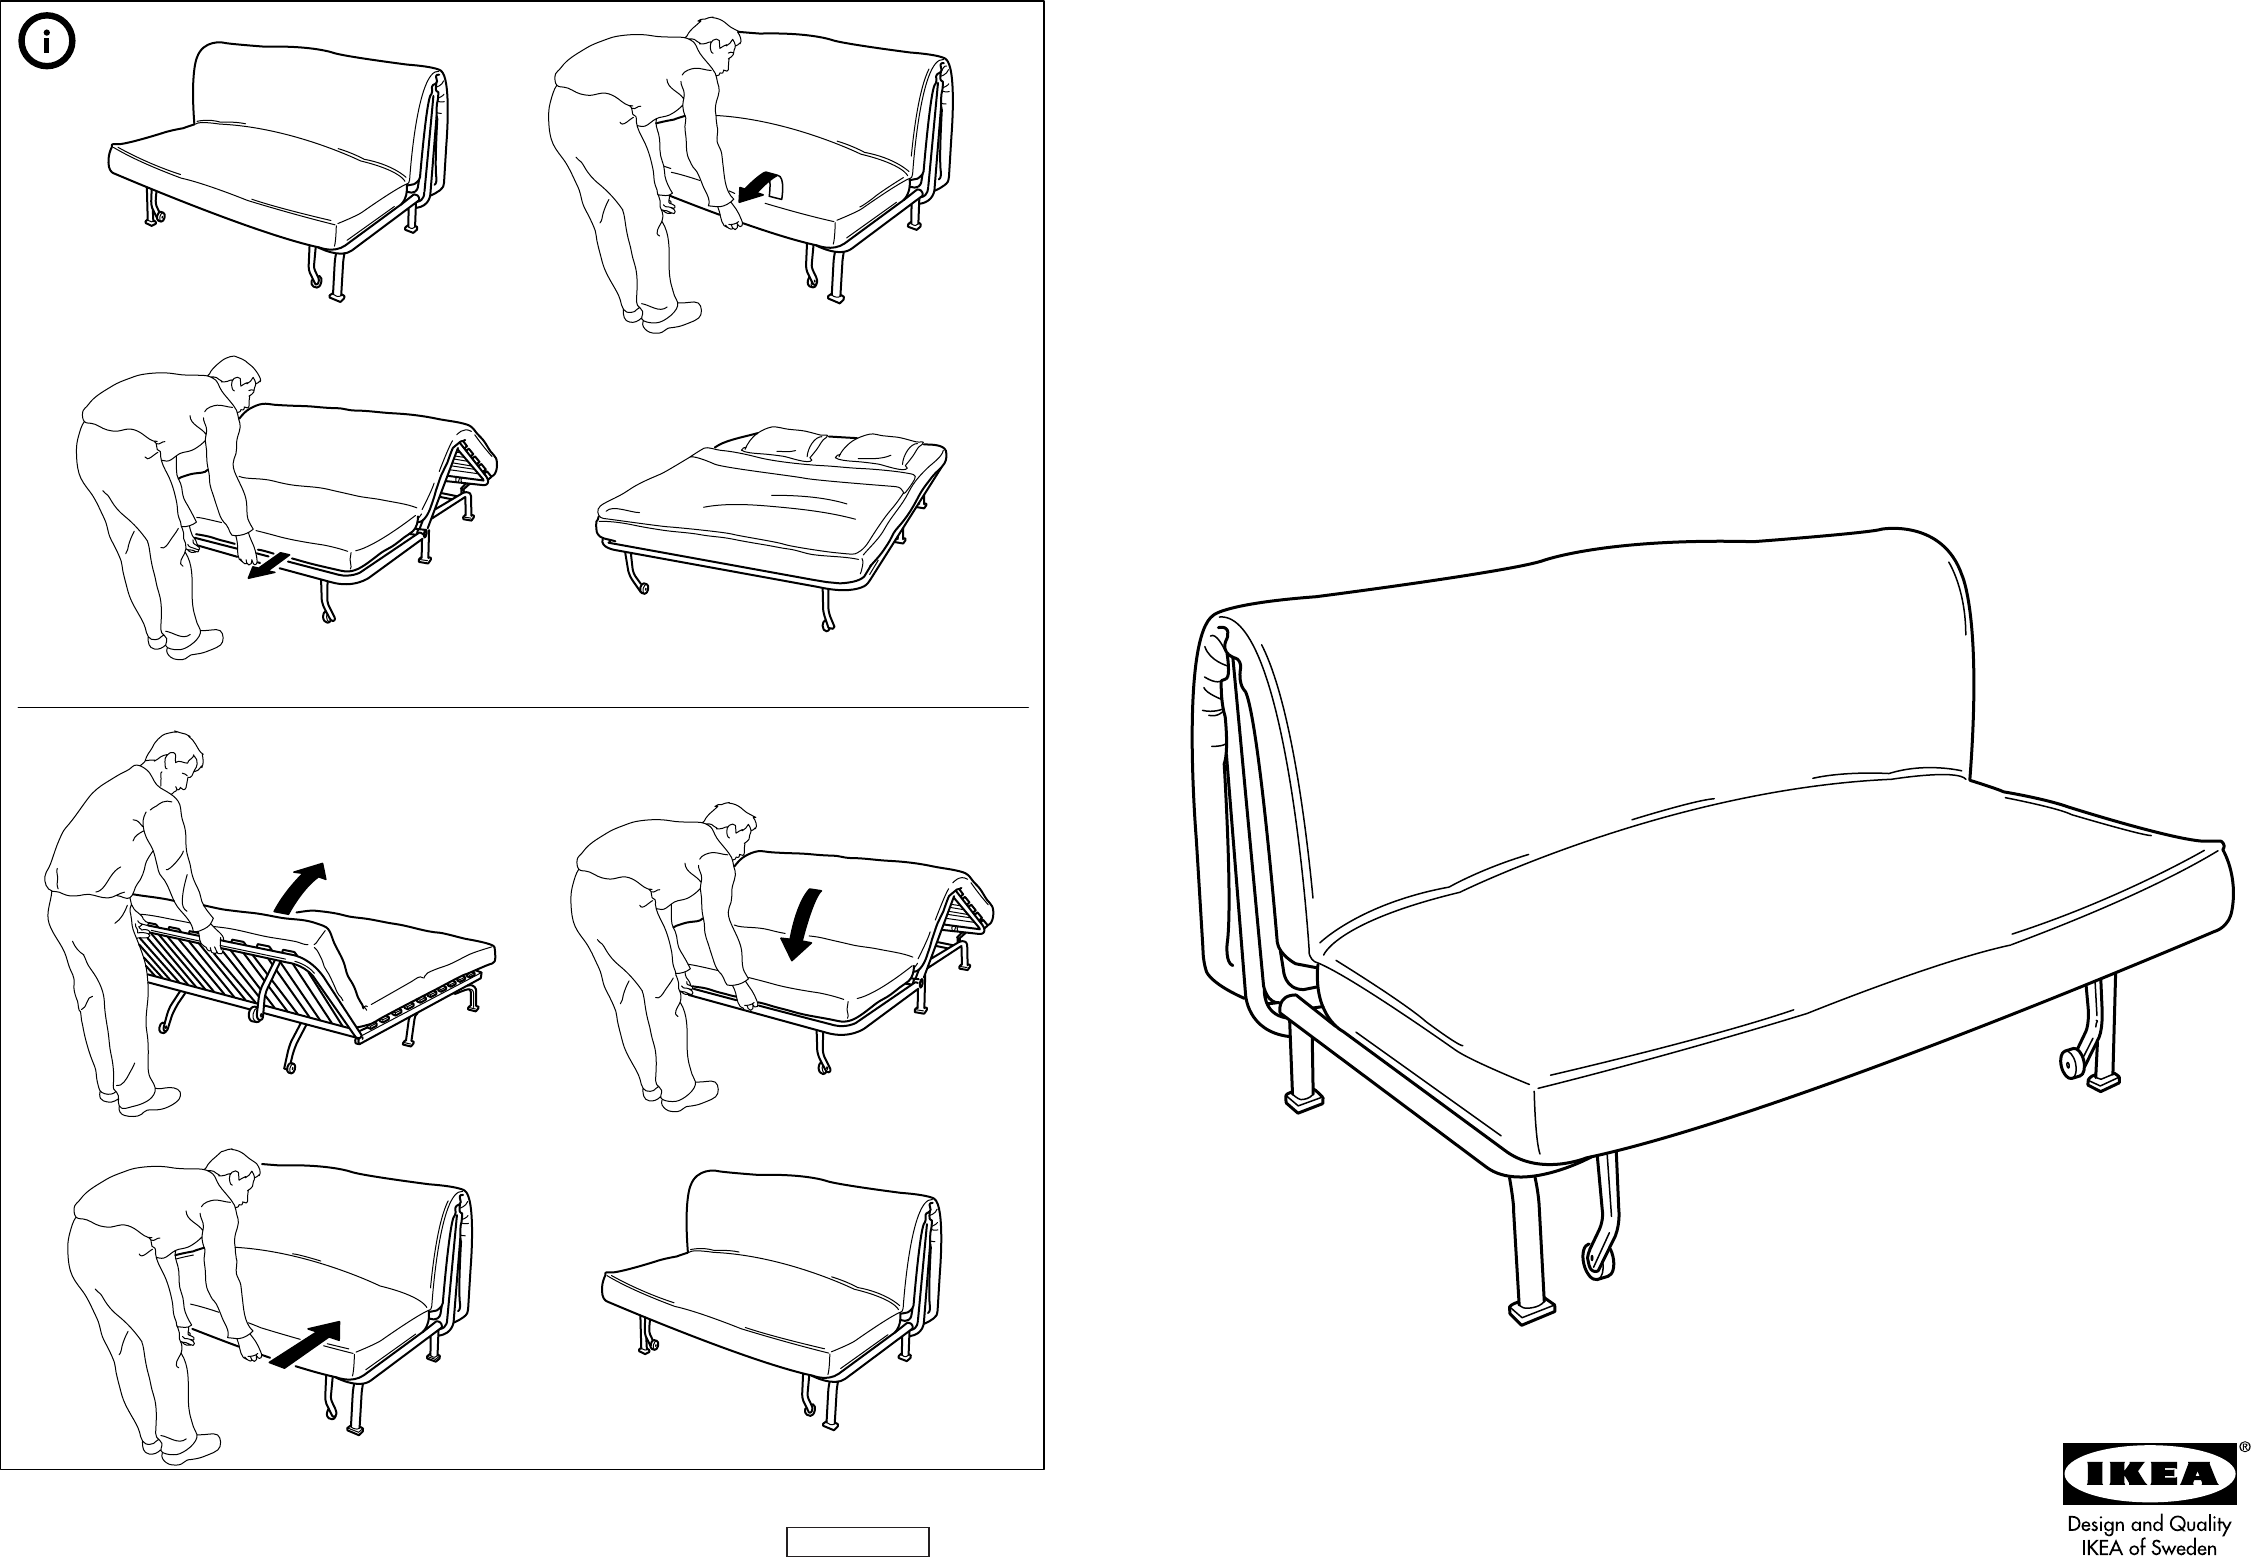 Manual Ikea onderstel slaapbank (page 1 of 6) (English, German, Dutch, Danish, French, Polish, Portuguese, Swedish, Spanish, Finnish)